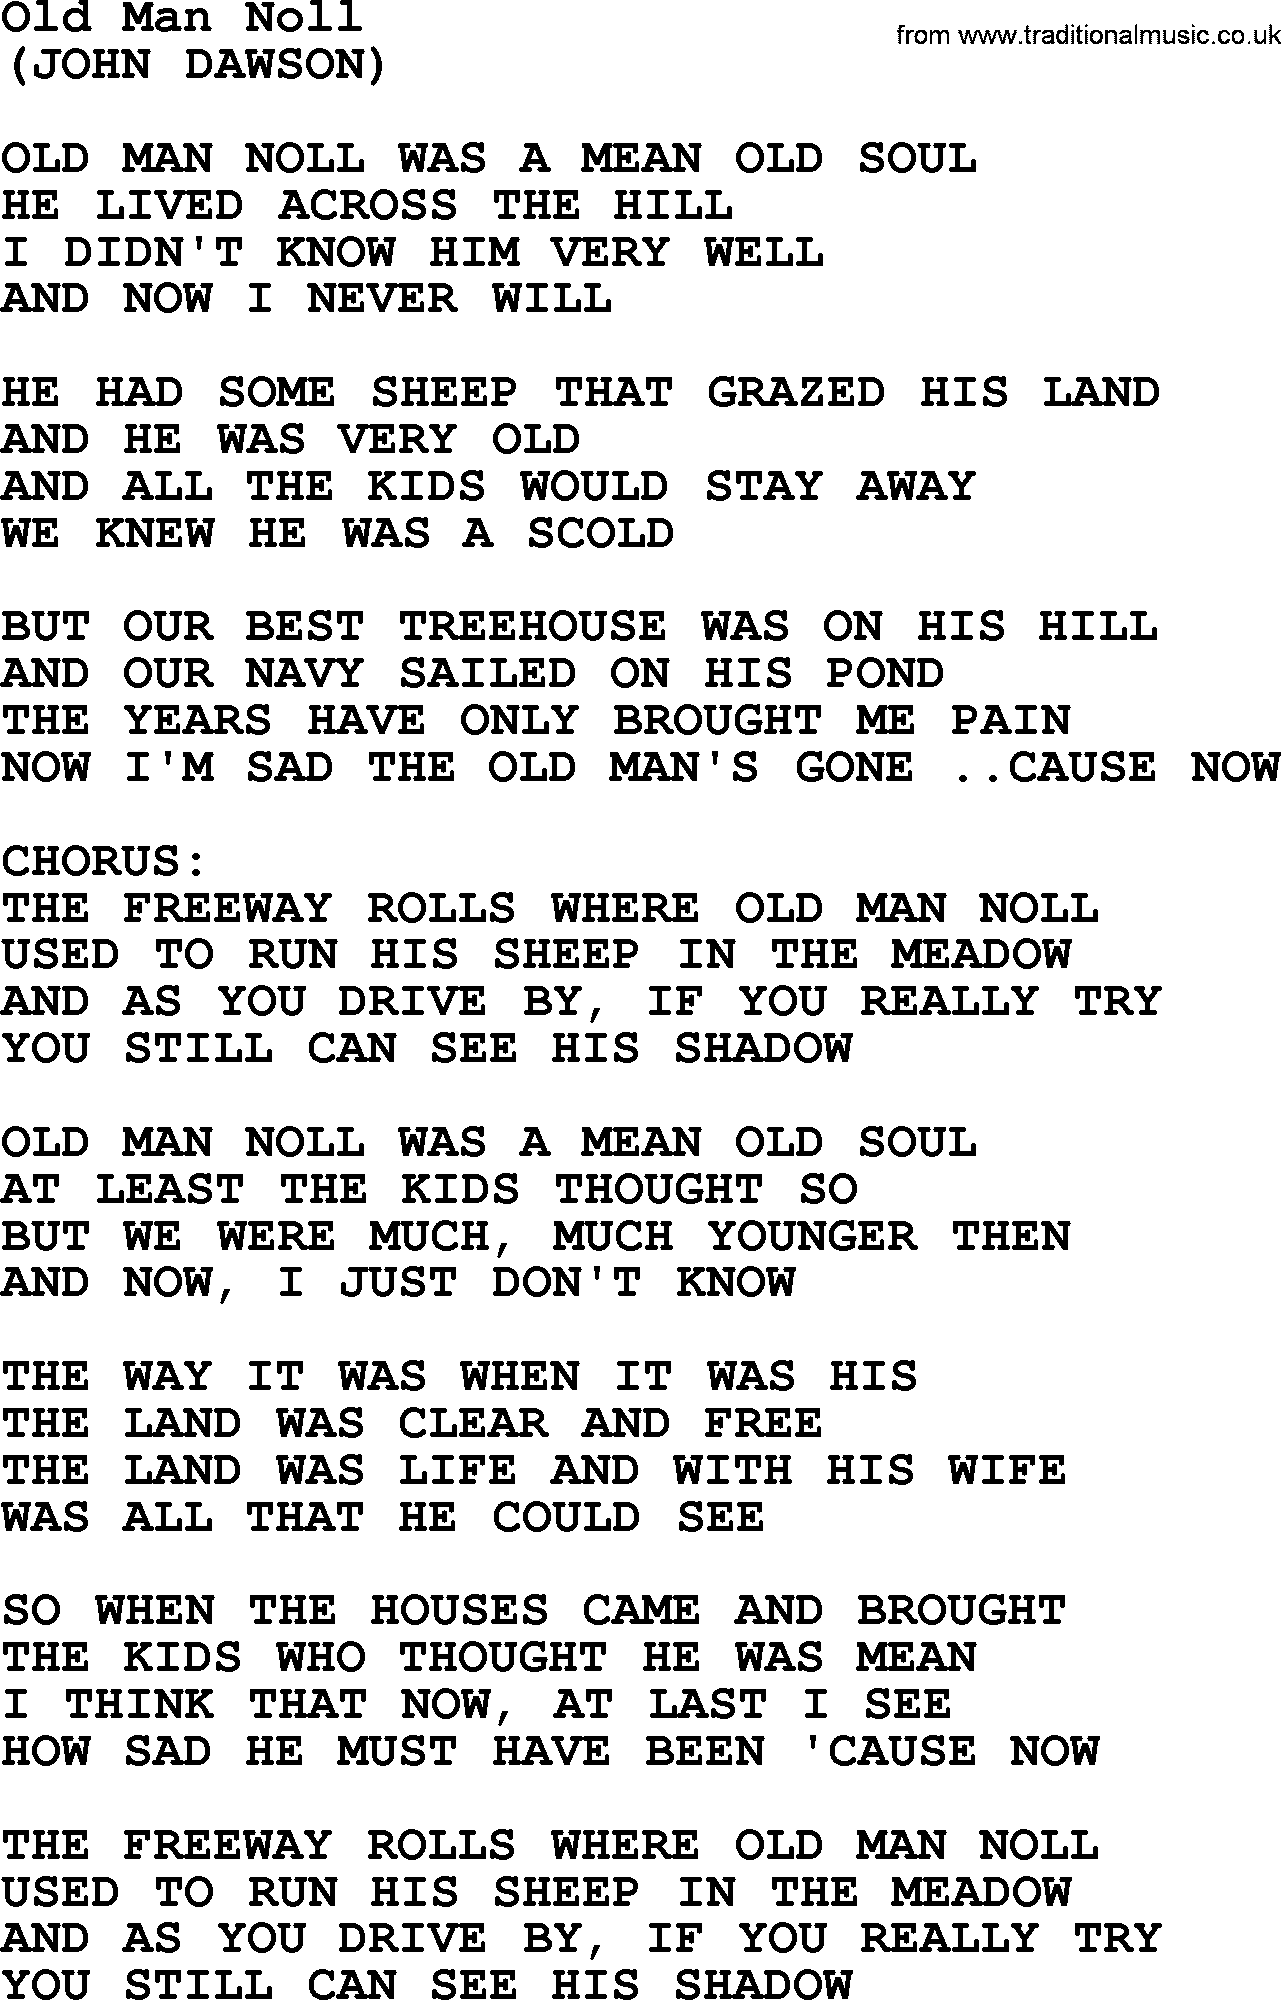 The Byrds song Old Man Noll, lyrics